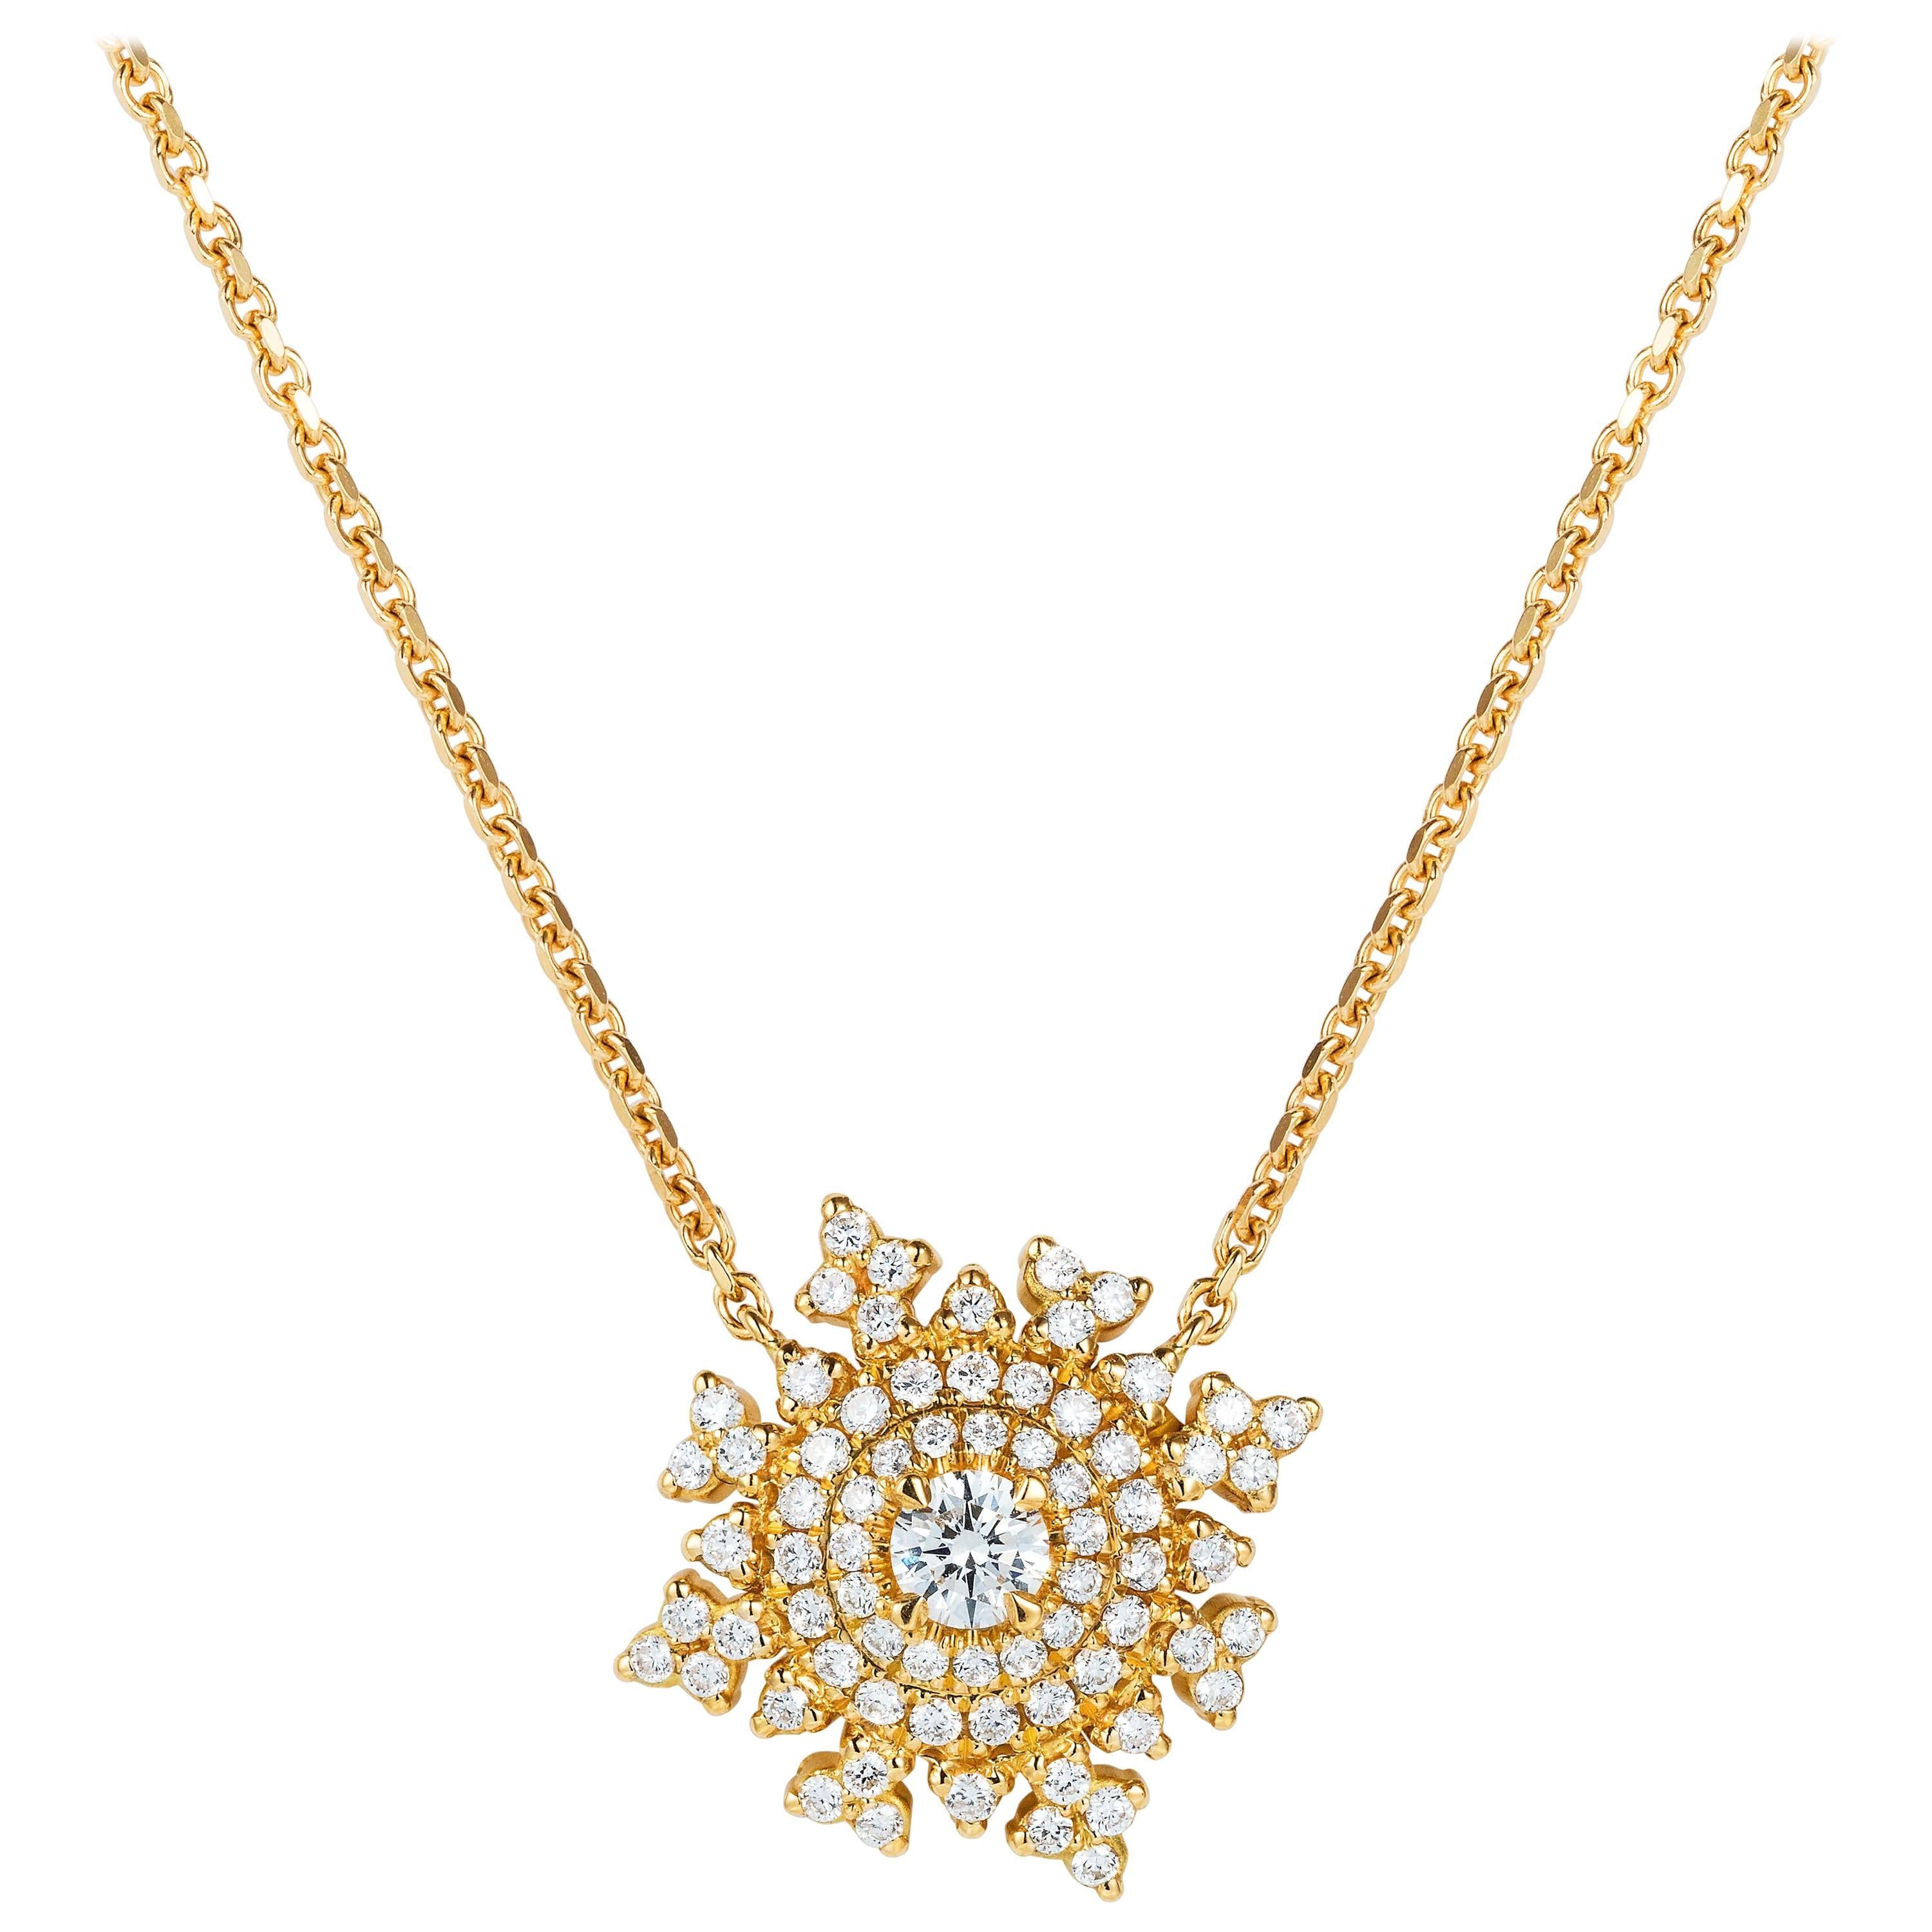 Nadine Aysoy Petite Tsarina 18 Karat Yellow Gold and Diamond Necklace For Sale